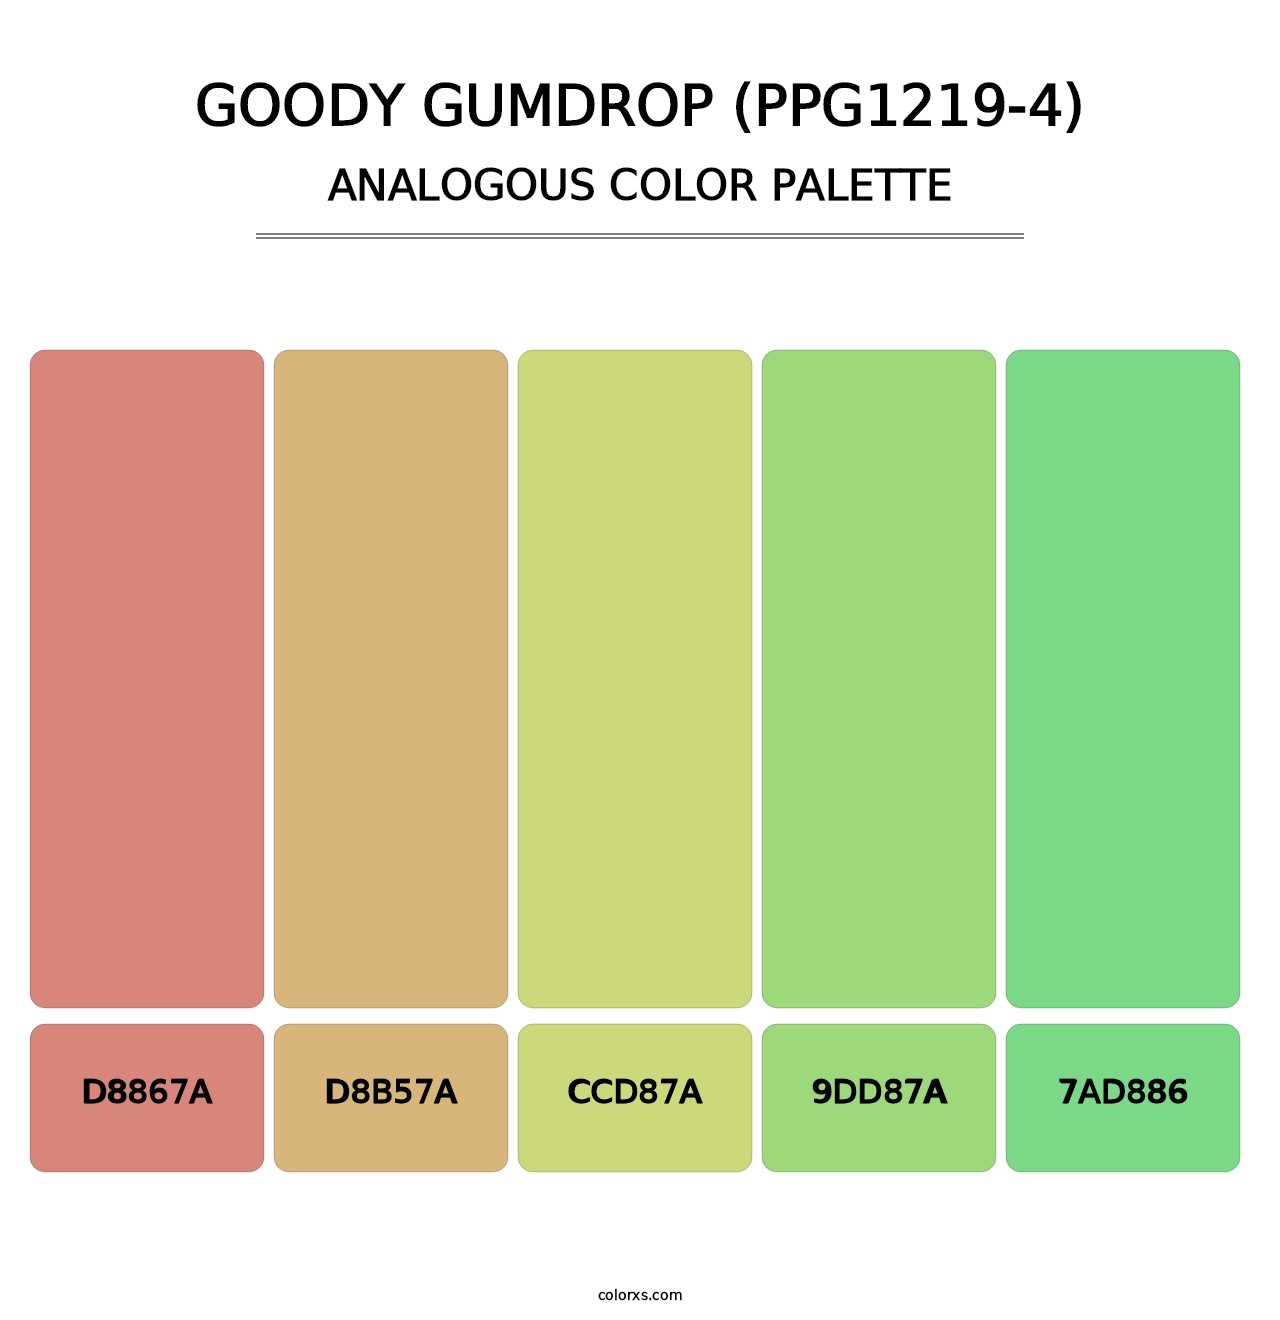 Goody Gumdrop (PPG1219-4) - Analogous Color Palette